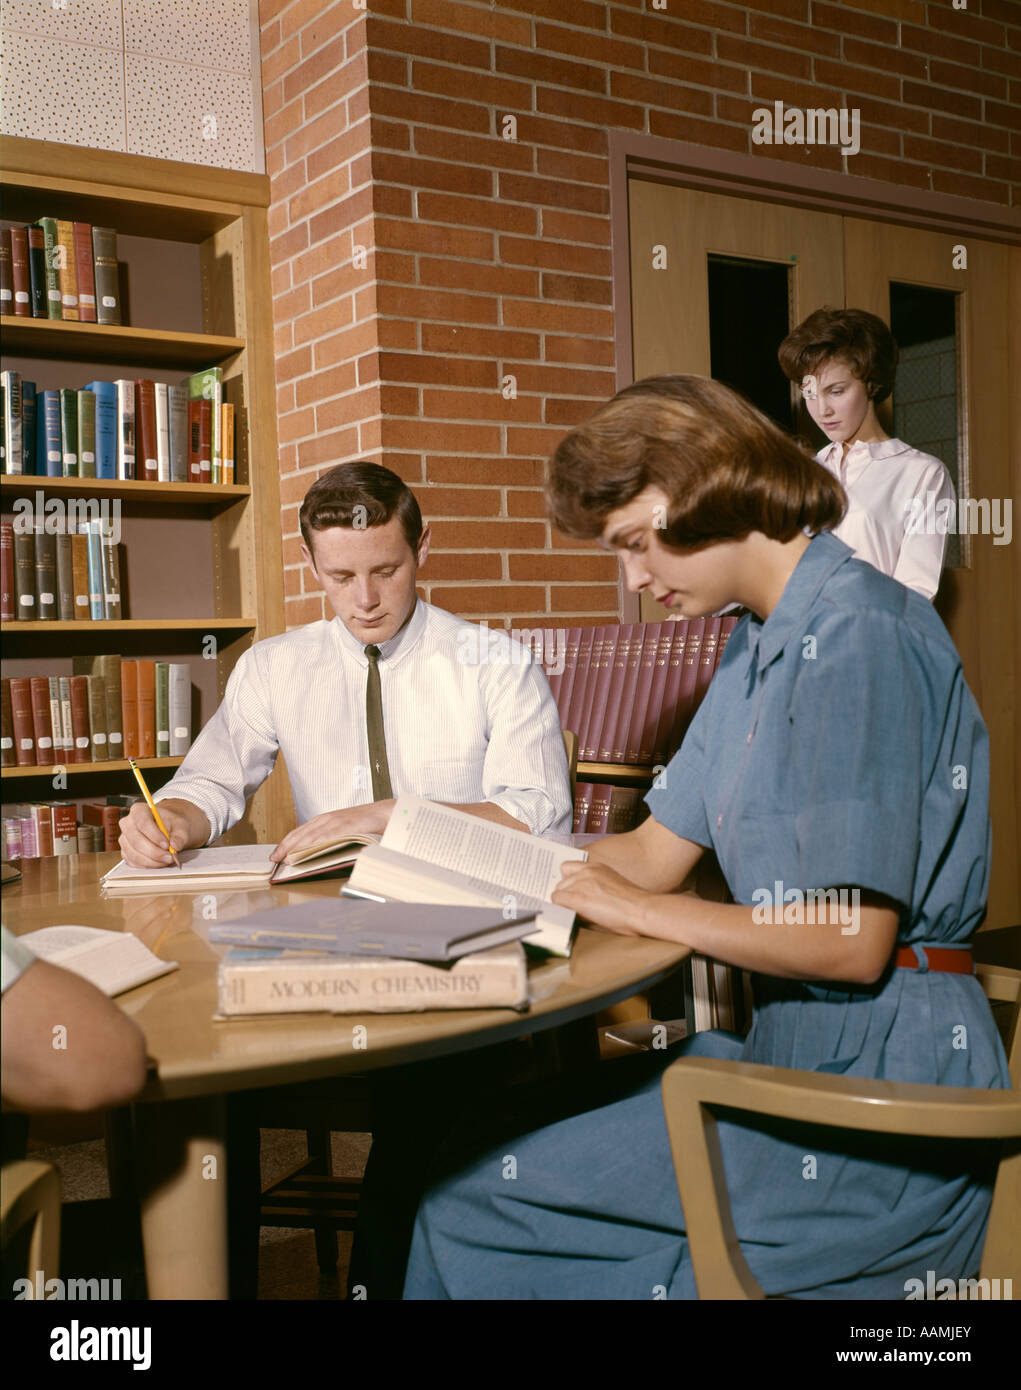 1960s college